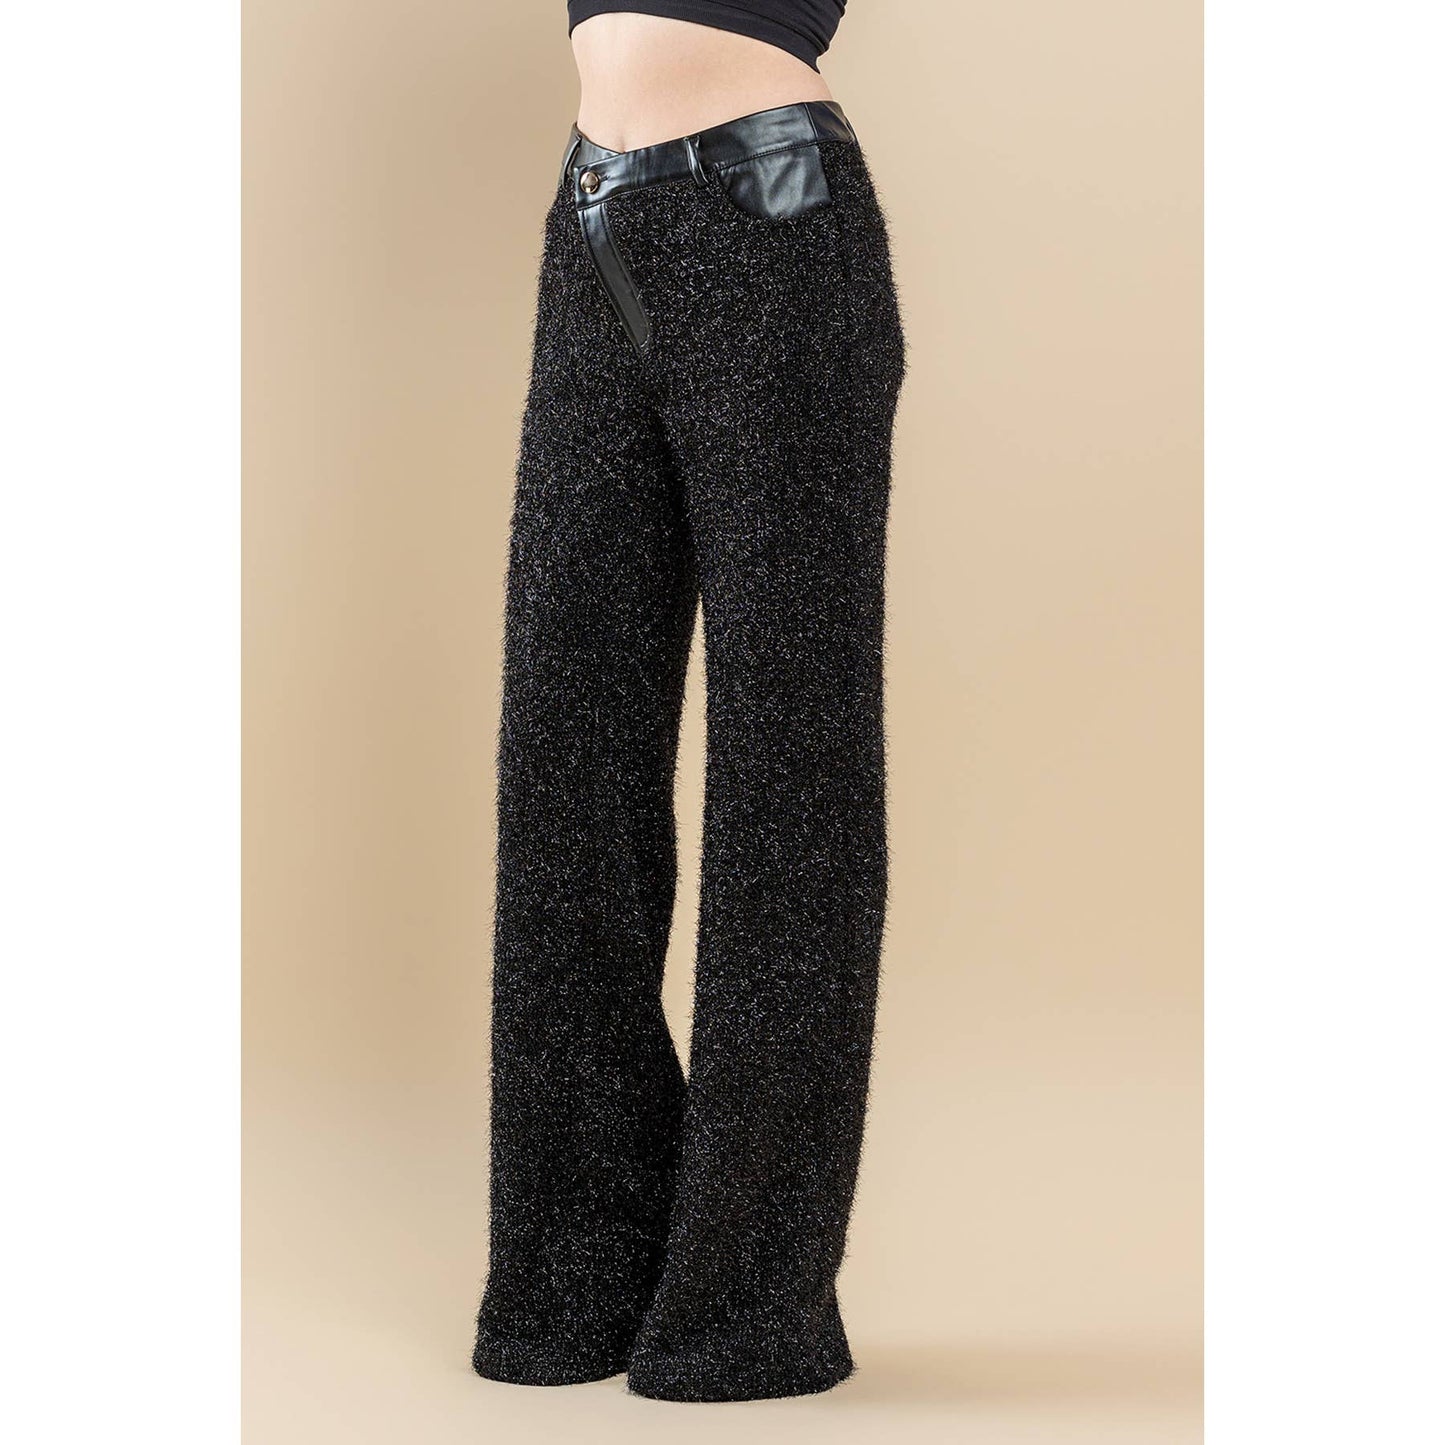 Asymmetrical leather waist band knit pants